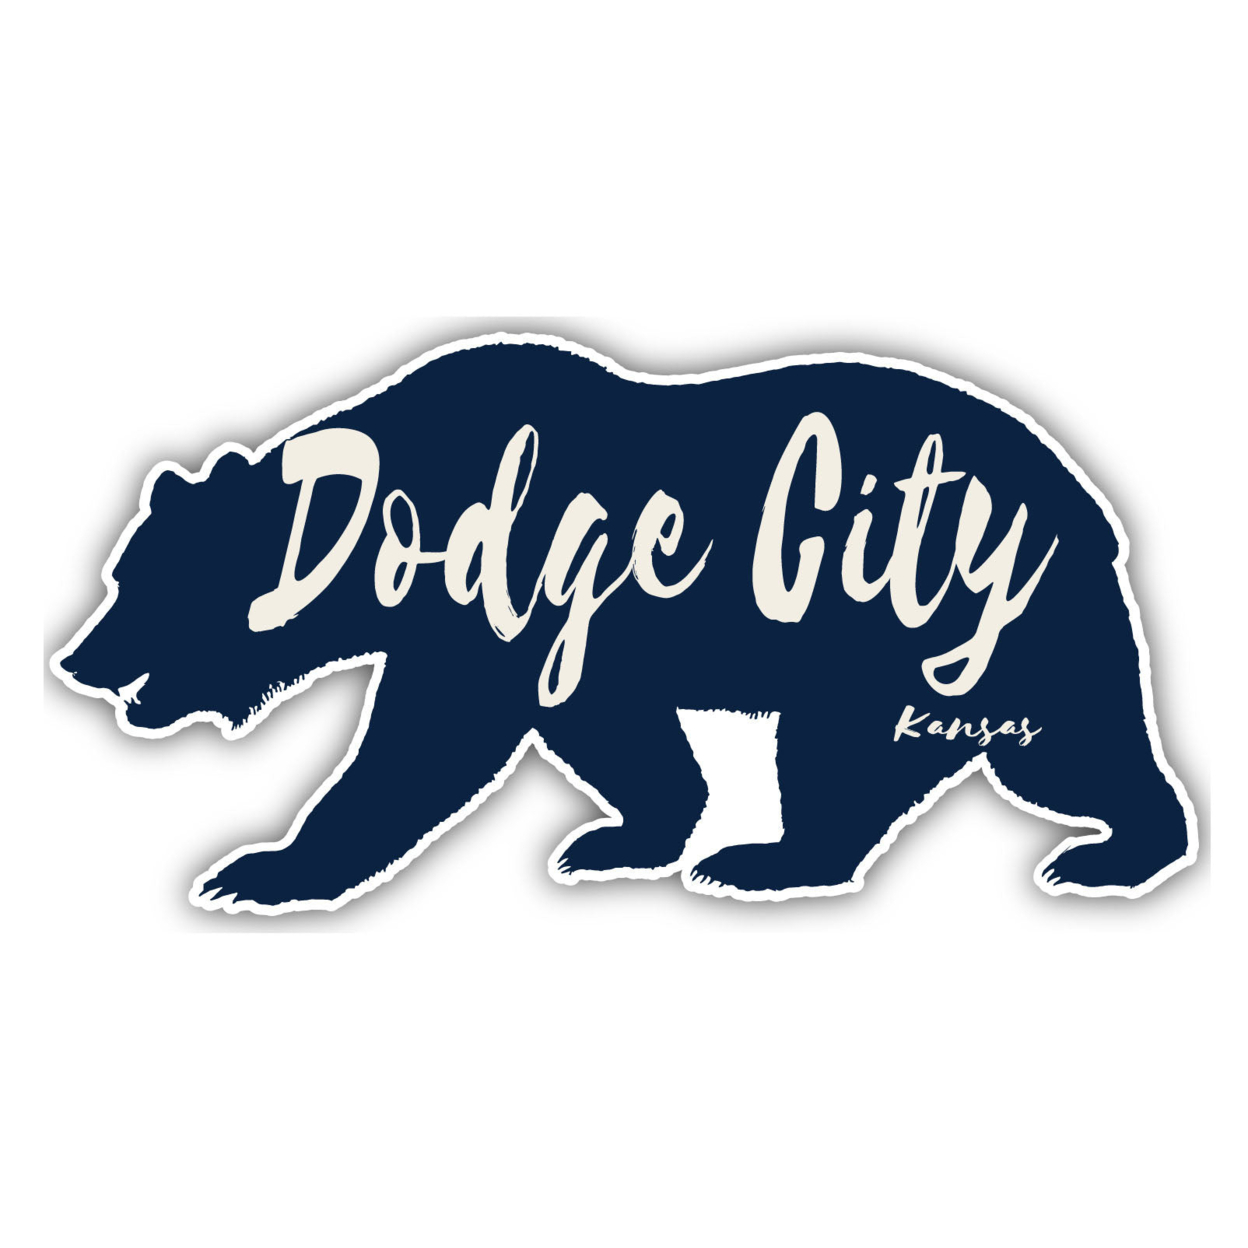 Dodge City Kansas Souvenir Decorative Stickers (Choose Theme And Size) - 4-Pack, 2-Inch, Adventures Awaits